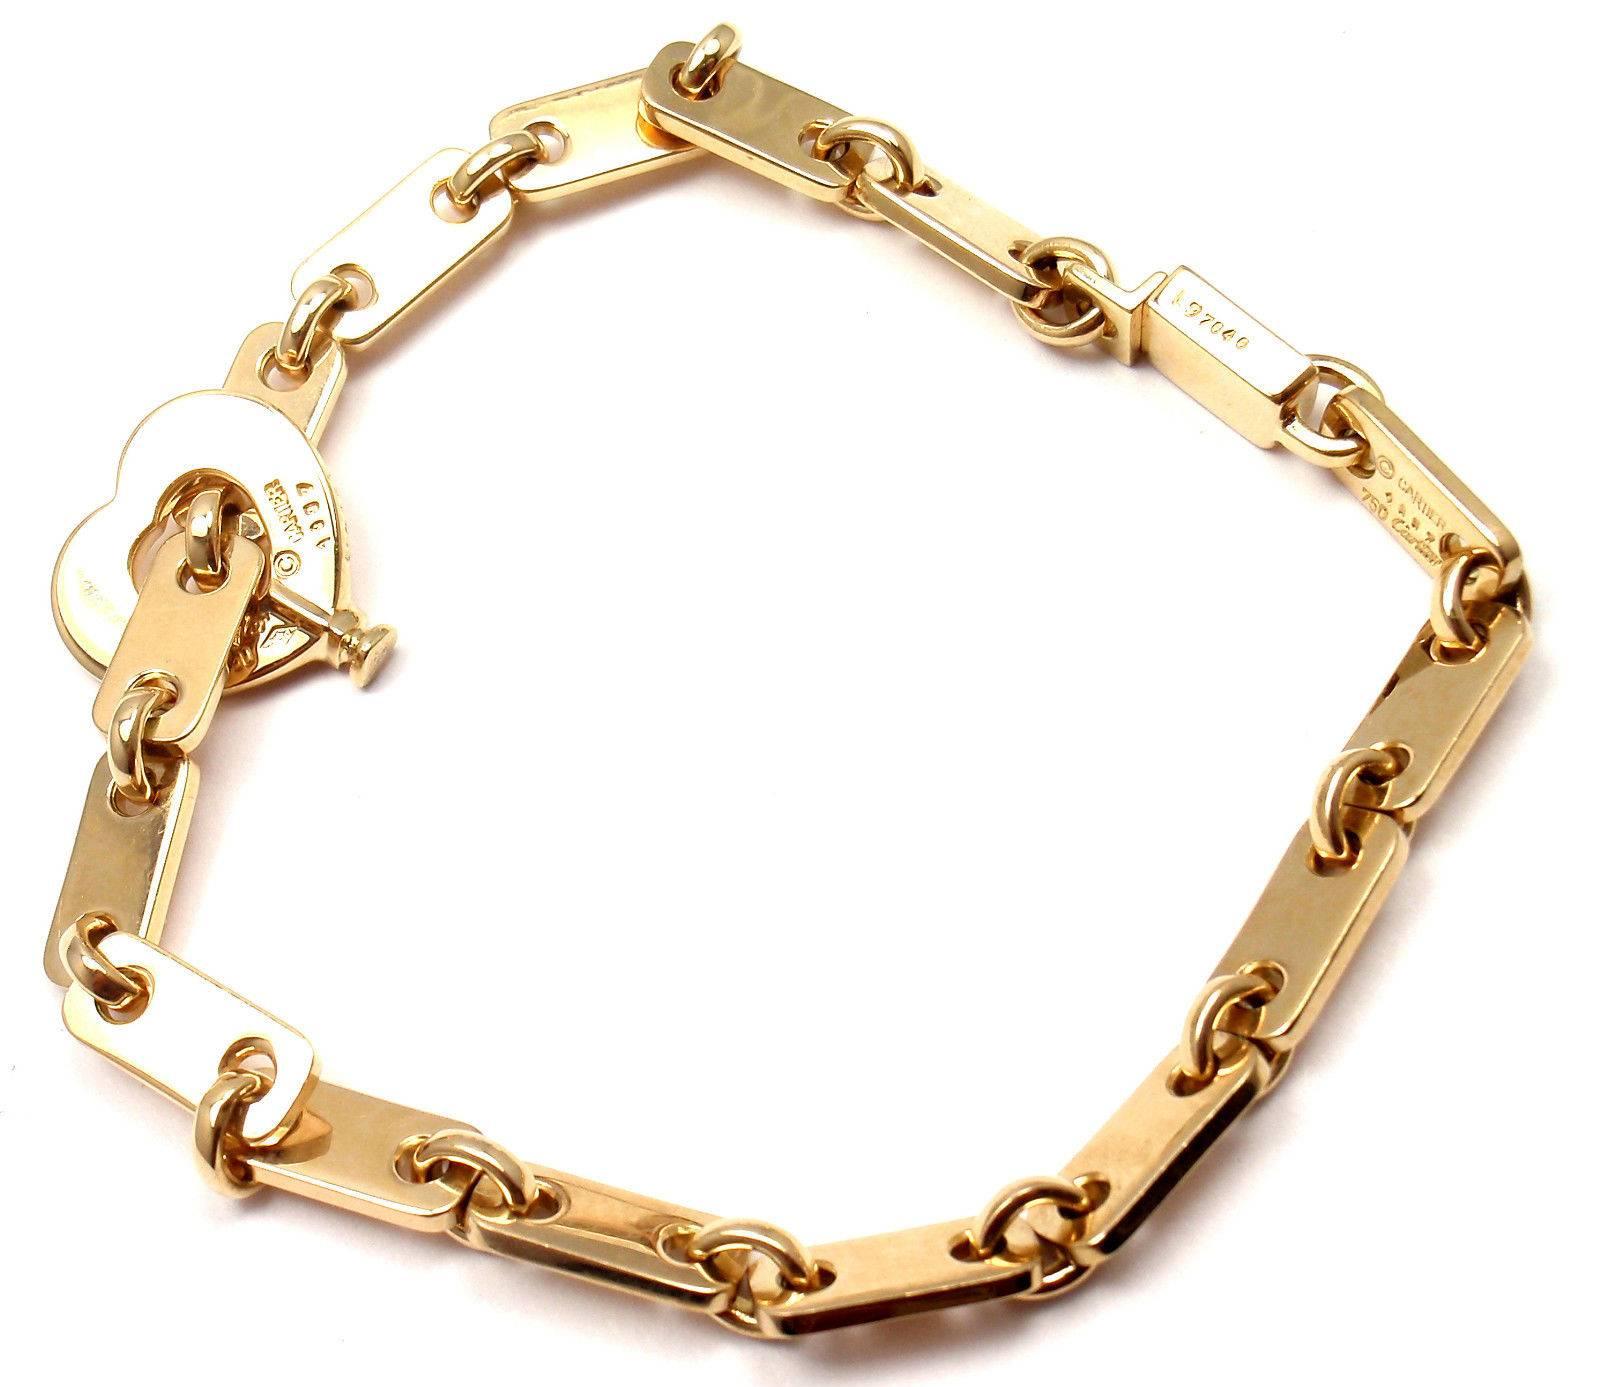 18k Yellow Gold Heart Lock Link Bracelet by Cartier. 

Measurements: 
Length: 7